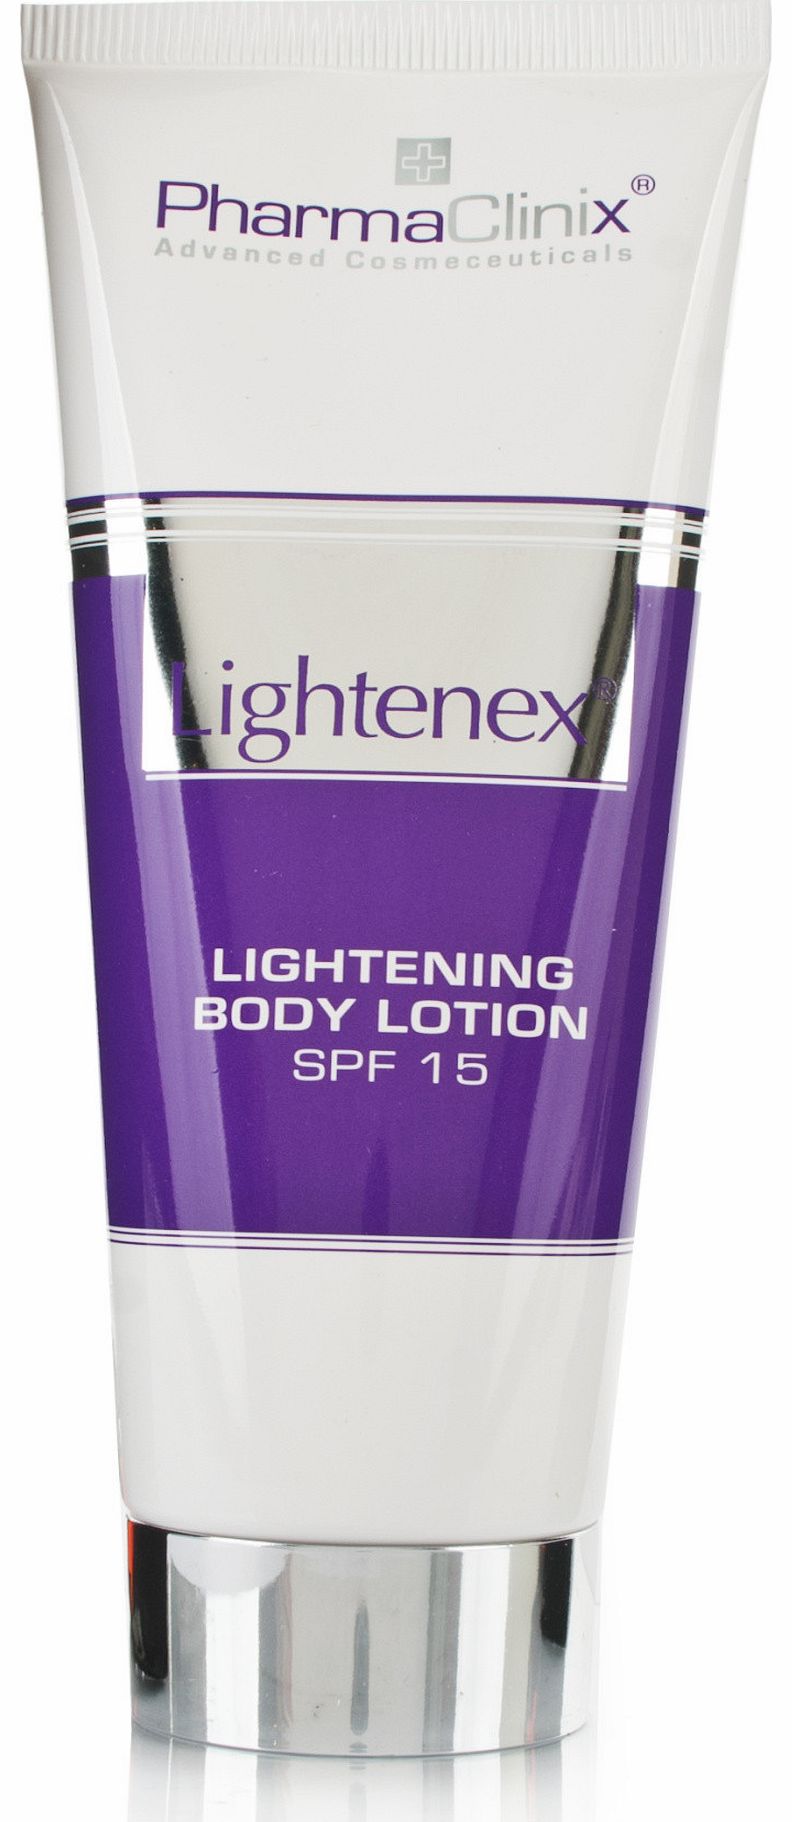 Lightenex Lightening Body Lotion